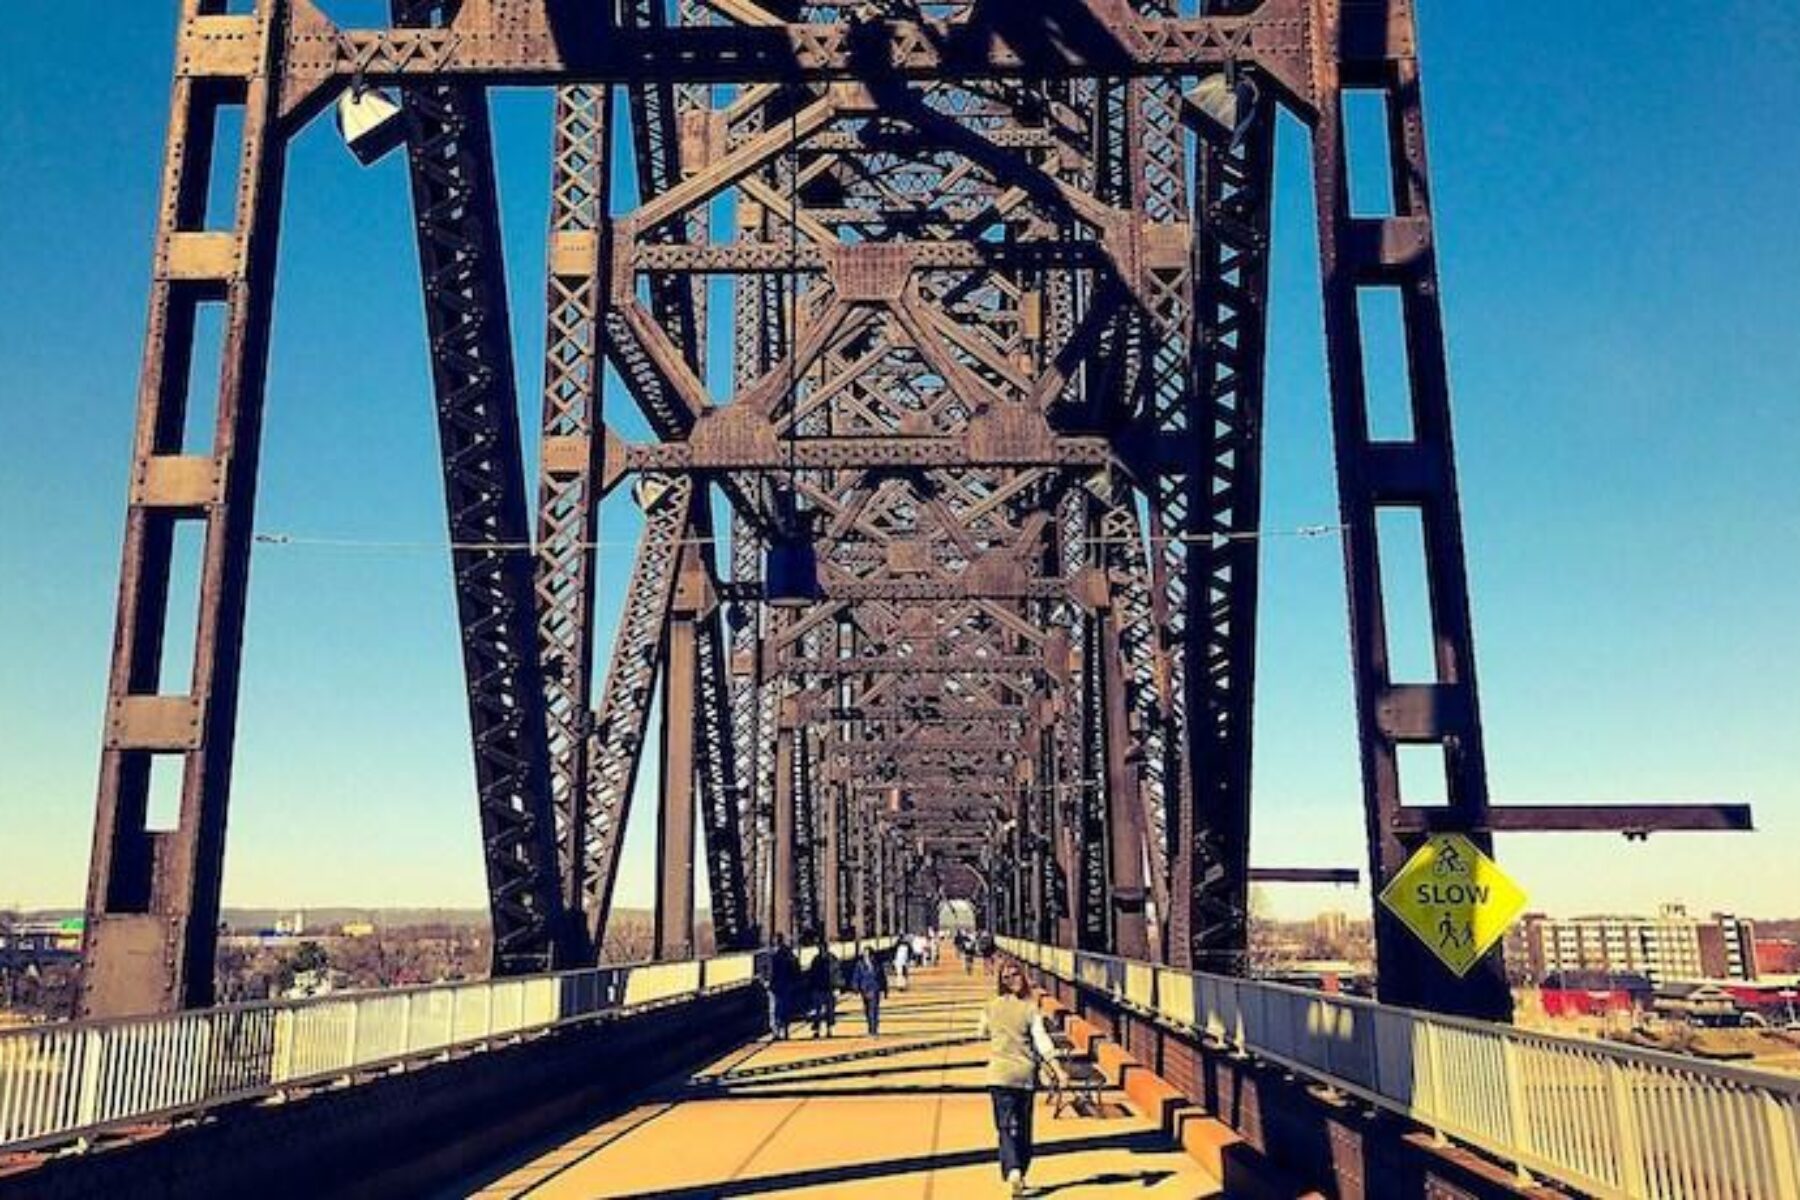 Kentucky's Big Four Bridge | Photo by TrailLink user karenestepp